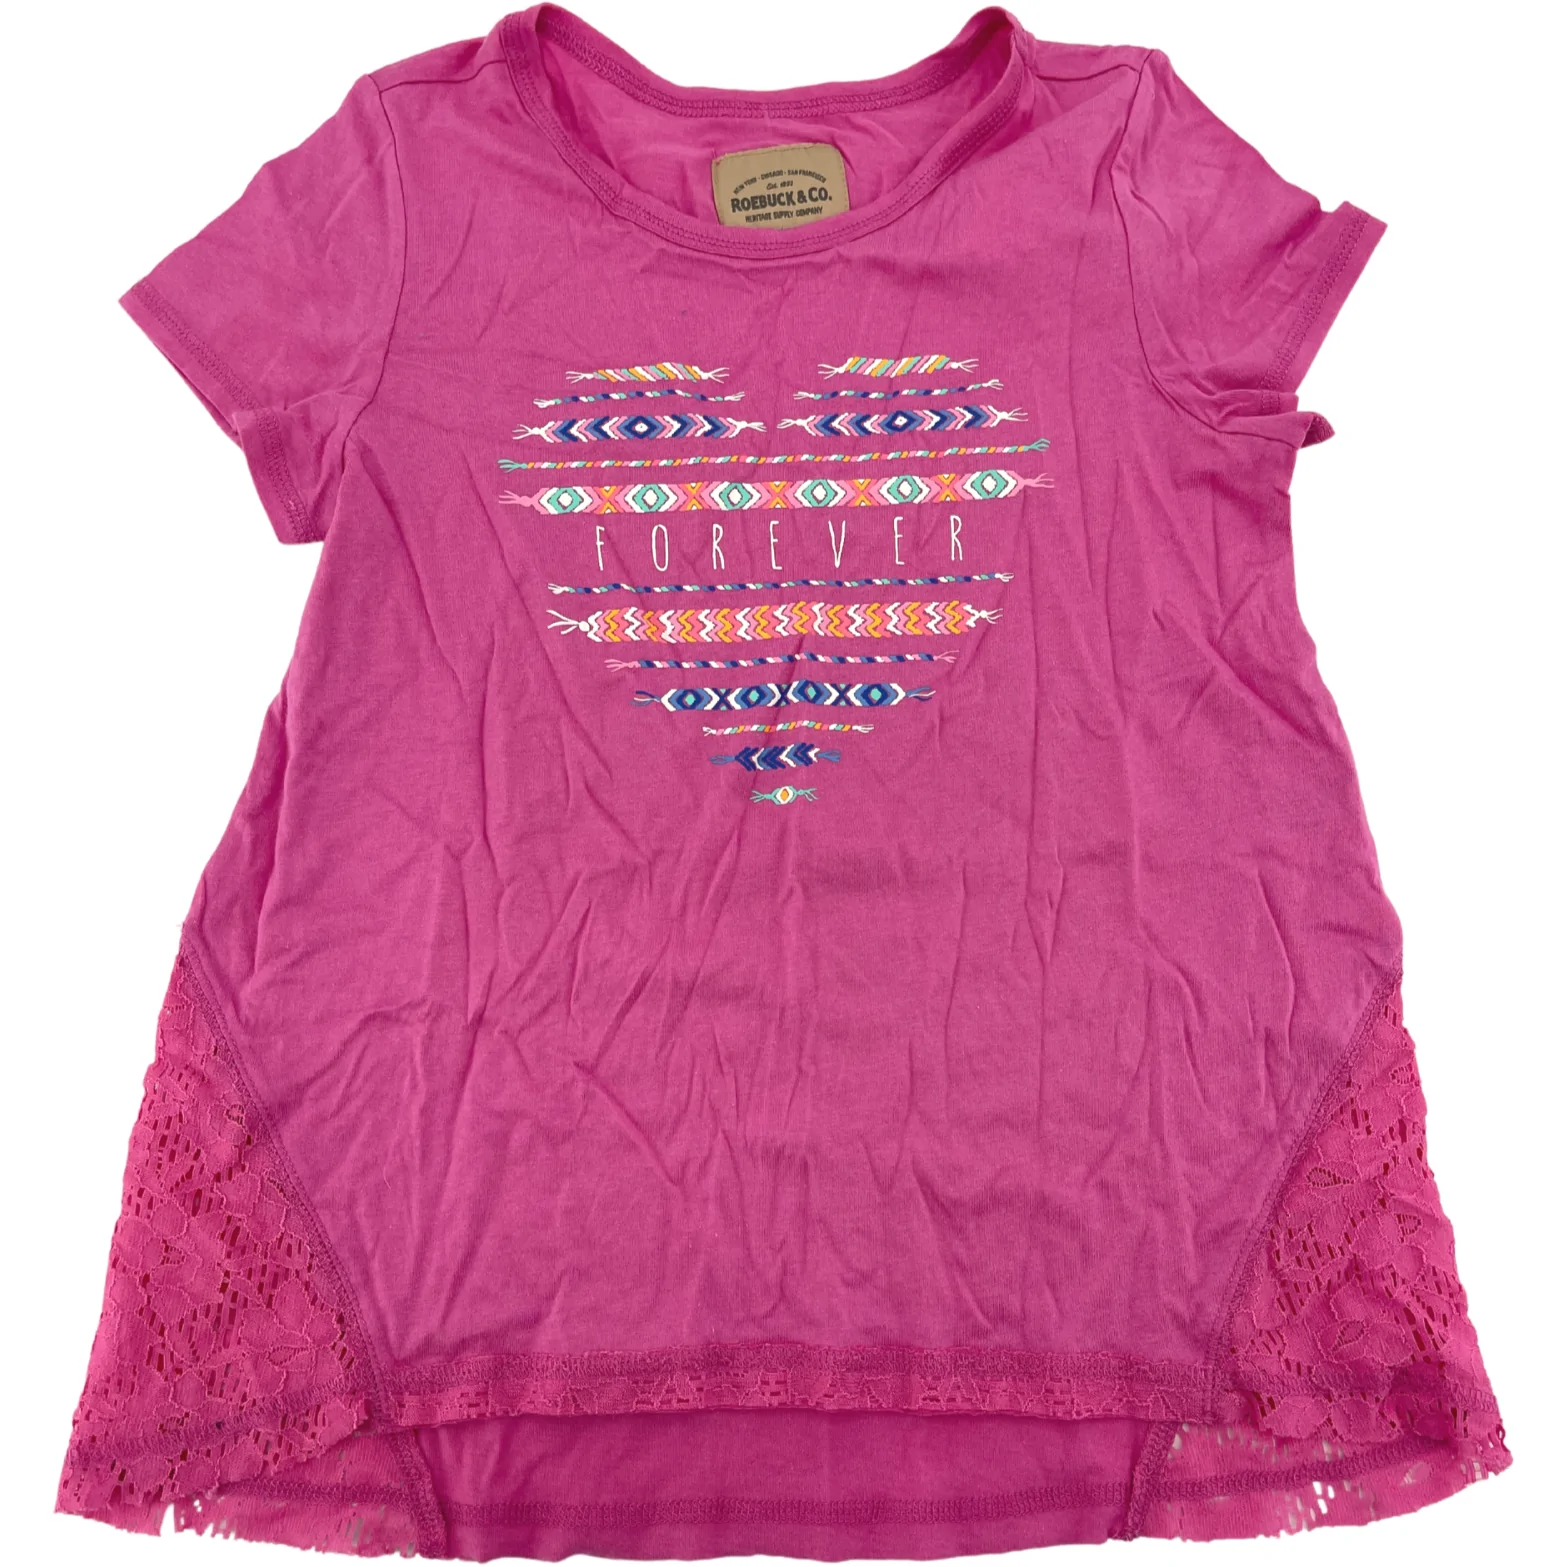 Roebuck & Co. Girl's T-Shirt / Pink / "Forever" / Size Medium